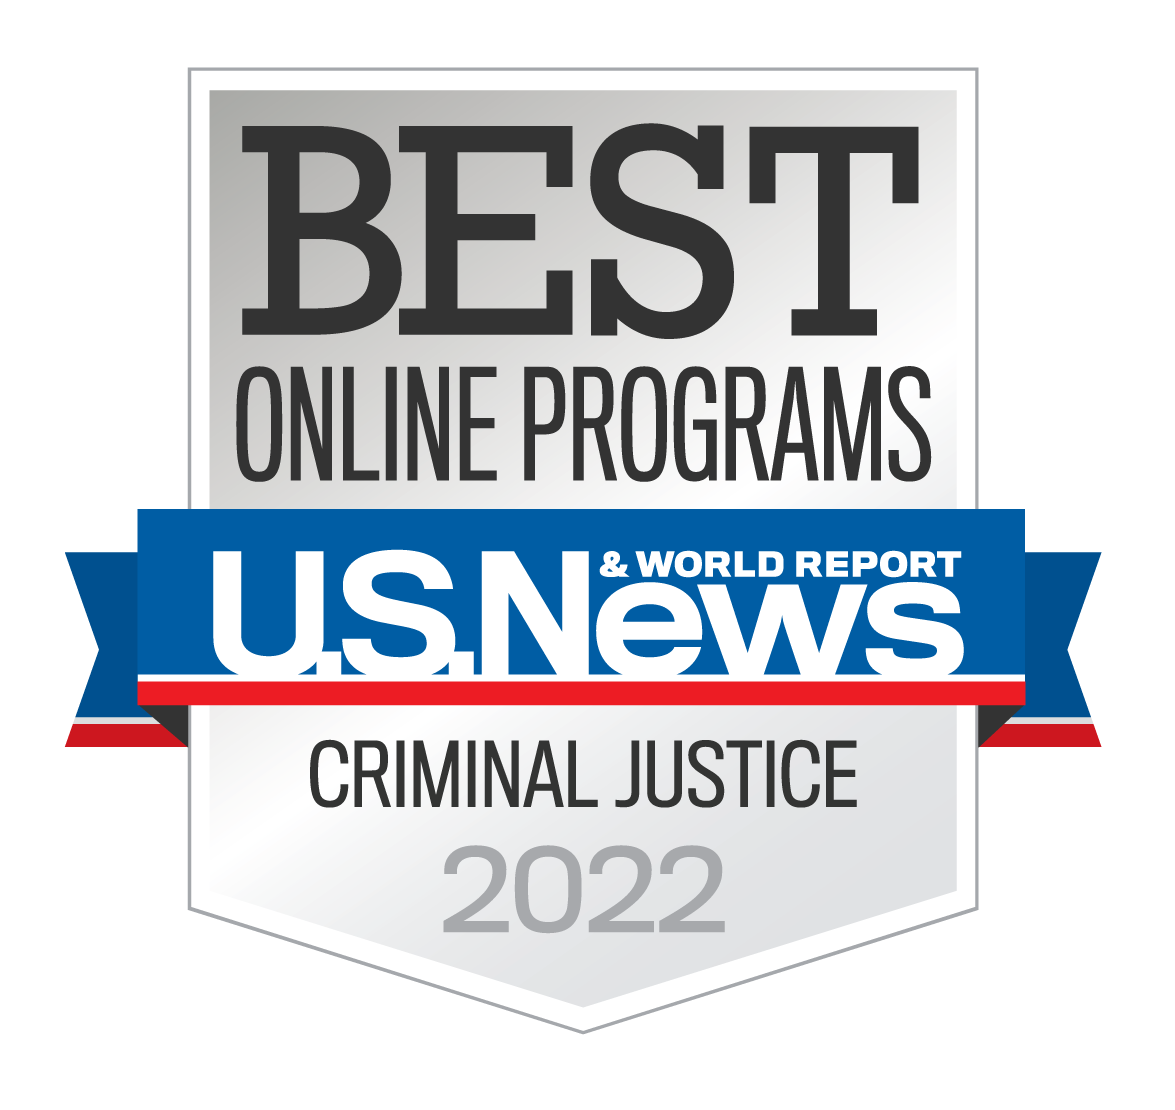 Best Online Programs U.S. News & World Reports Graduate Criminal Justice